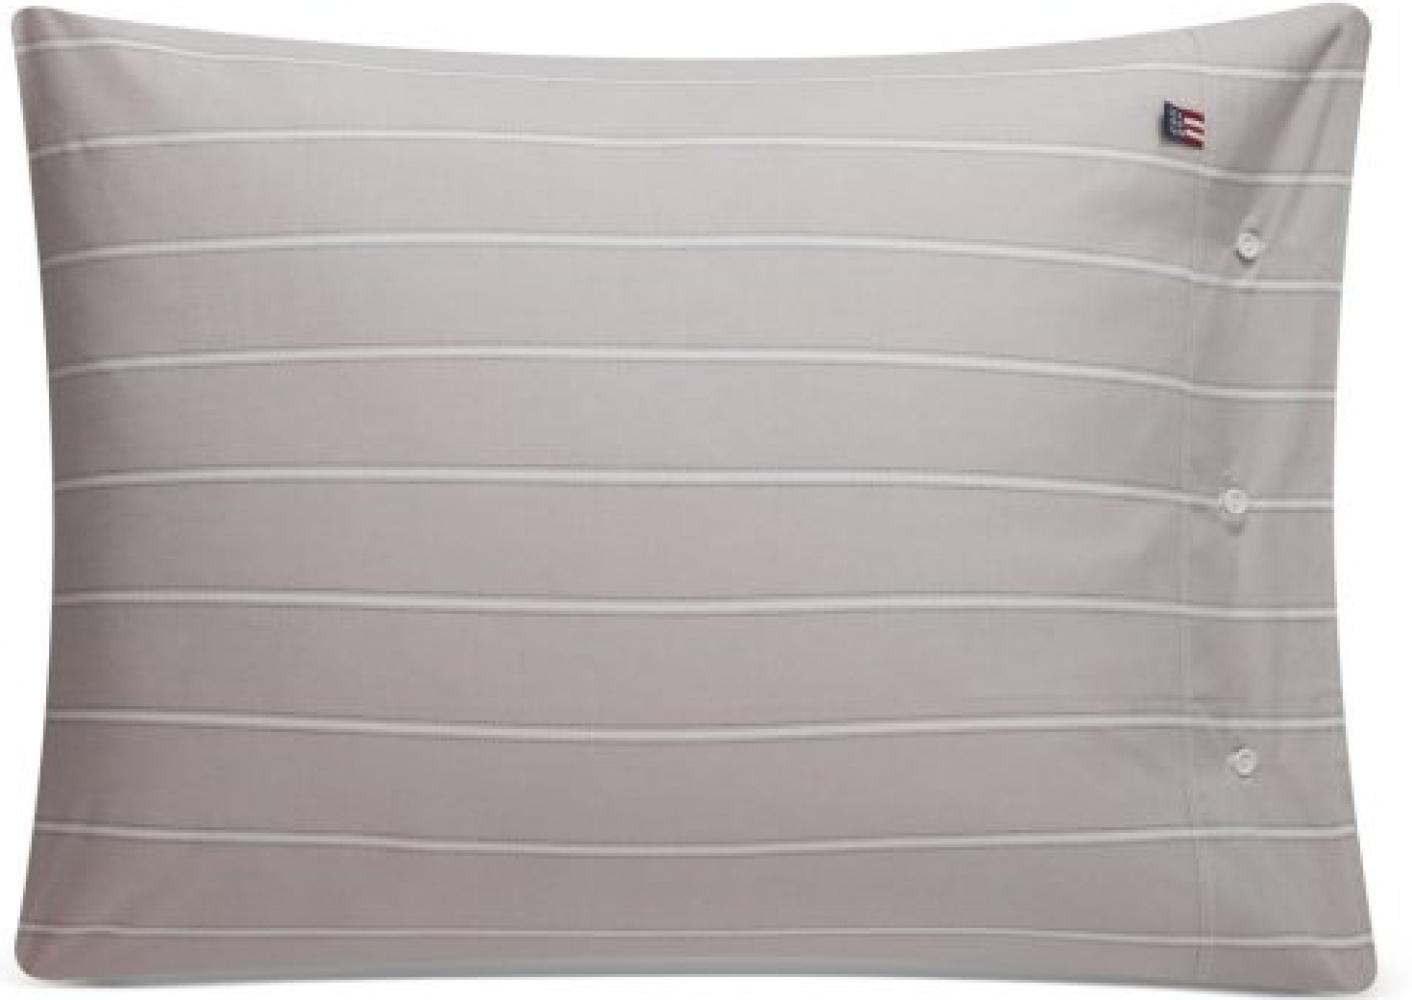 LEXINGTON Kissenbezug White Gray Striped Lyocell Cotton (80x80) 11230028-7600-P85 Bild 1